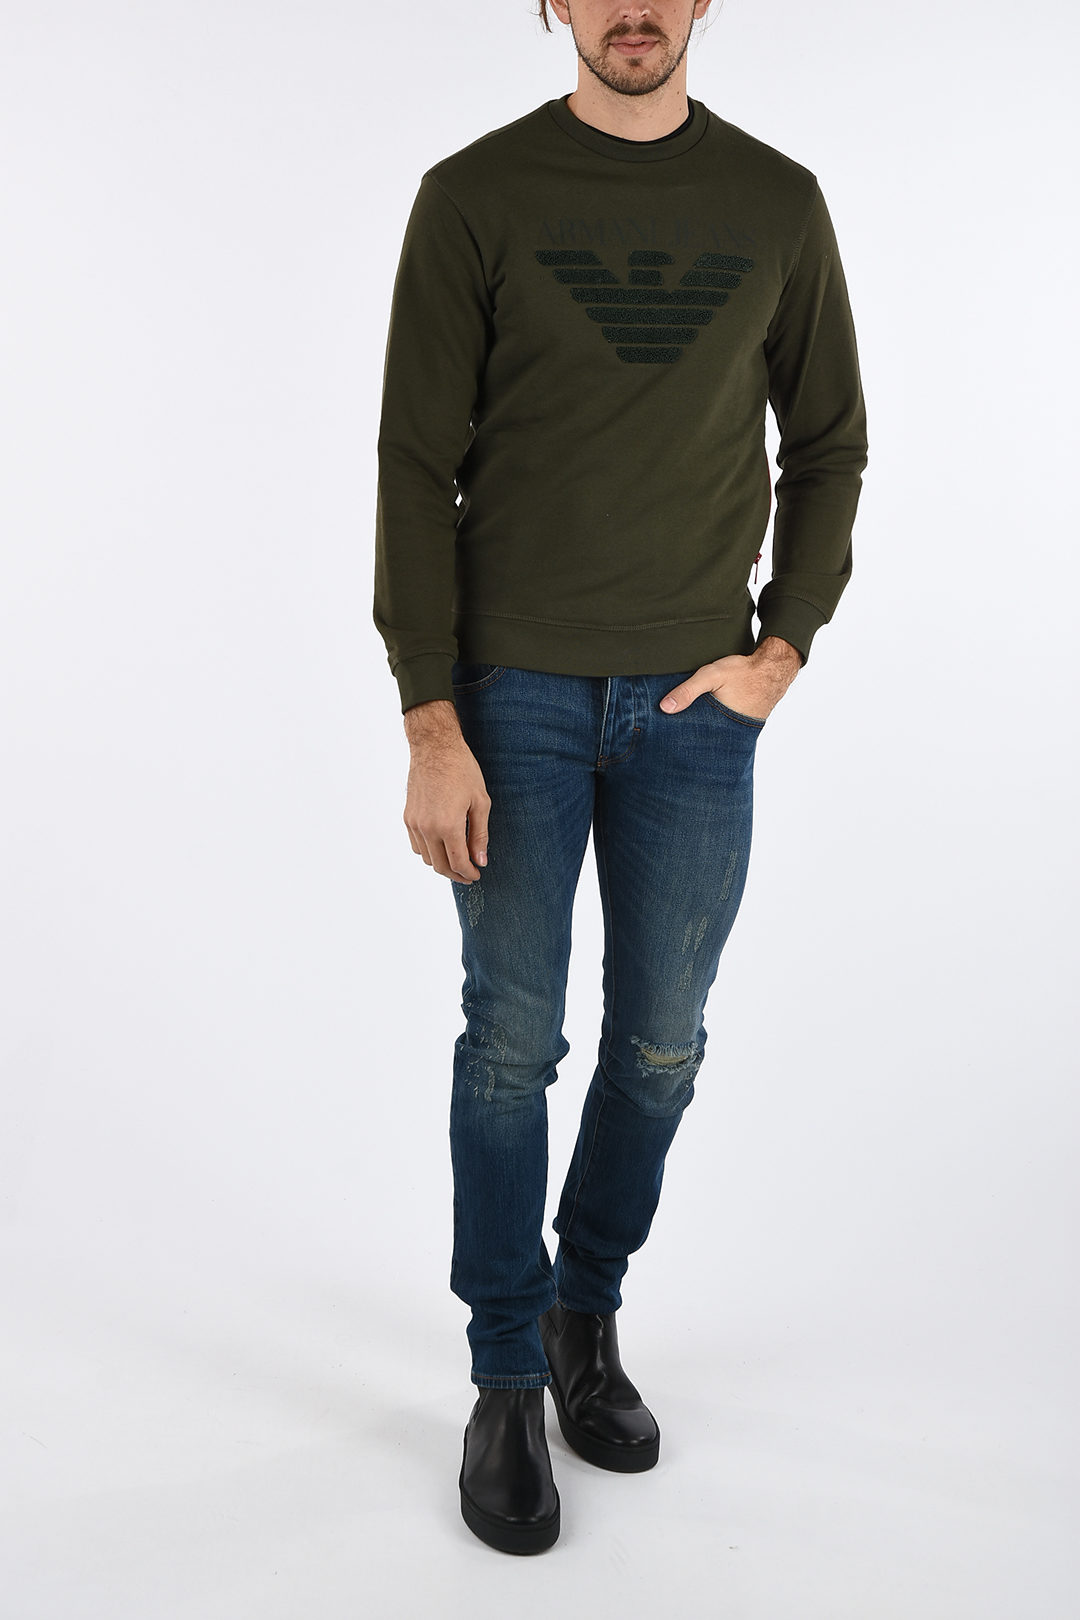 Armani JEANS Sweatshirt men - Glamood Outlet